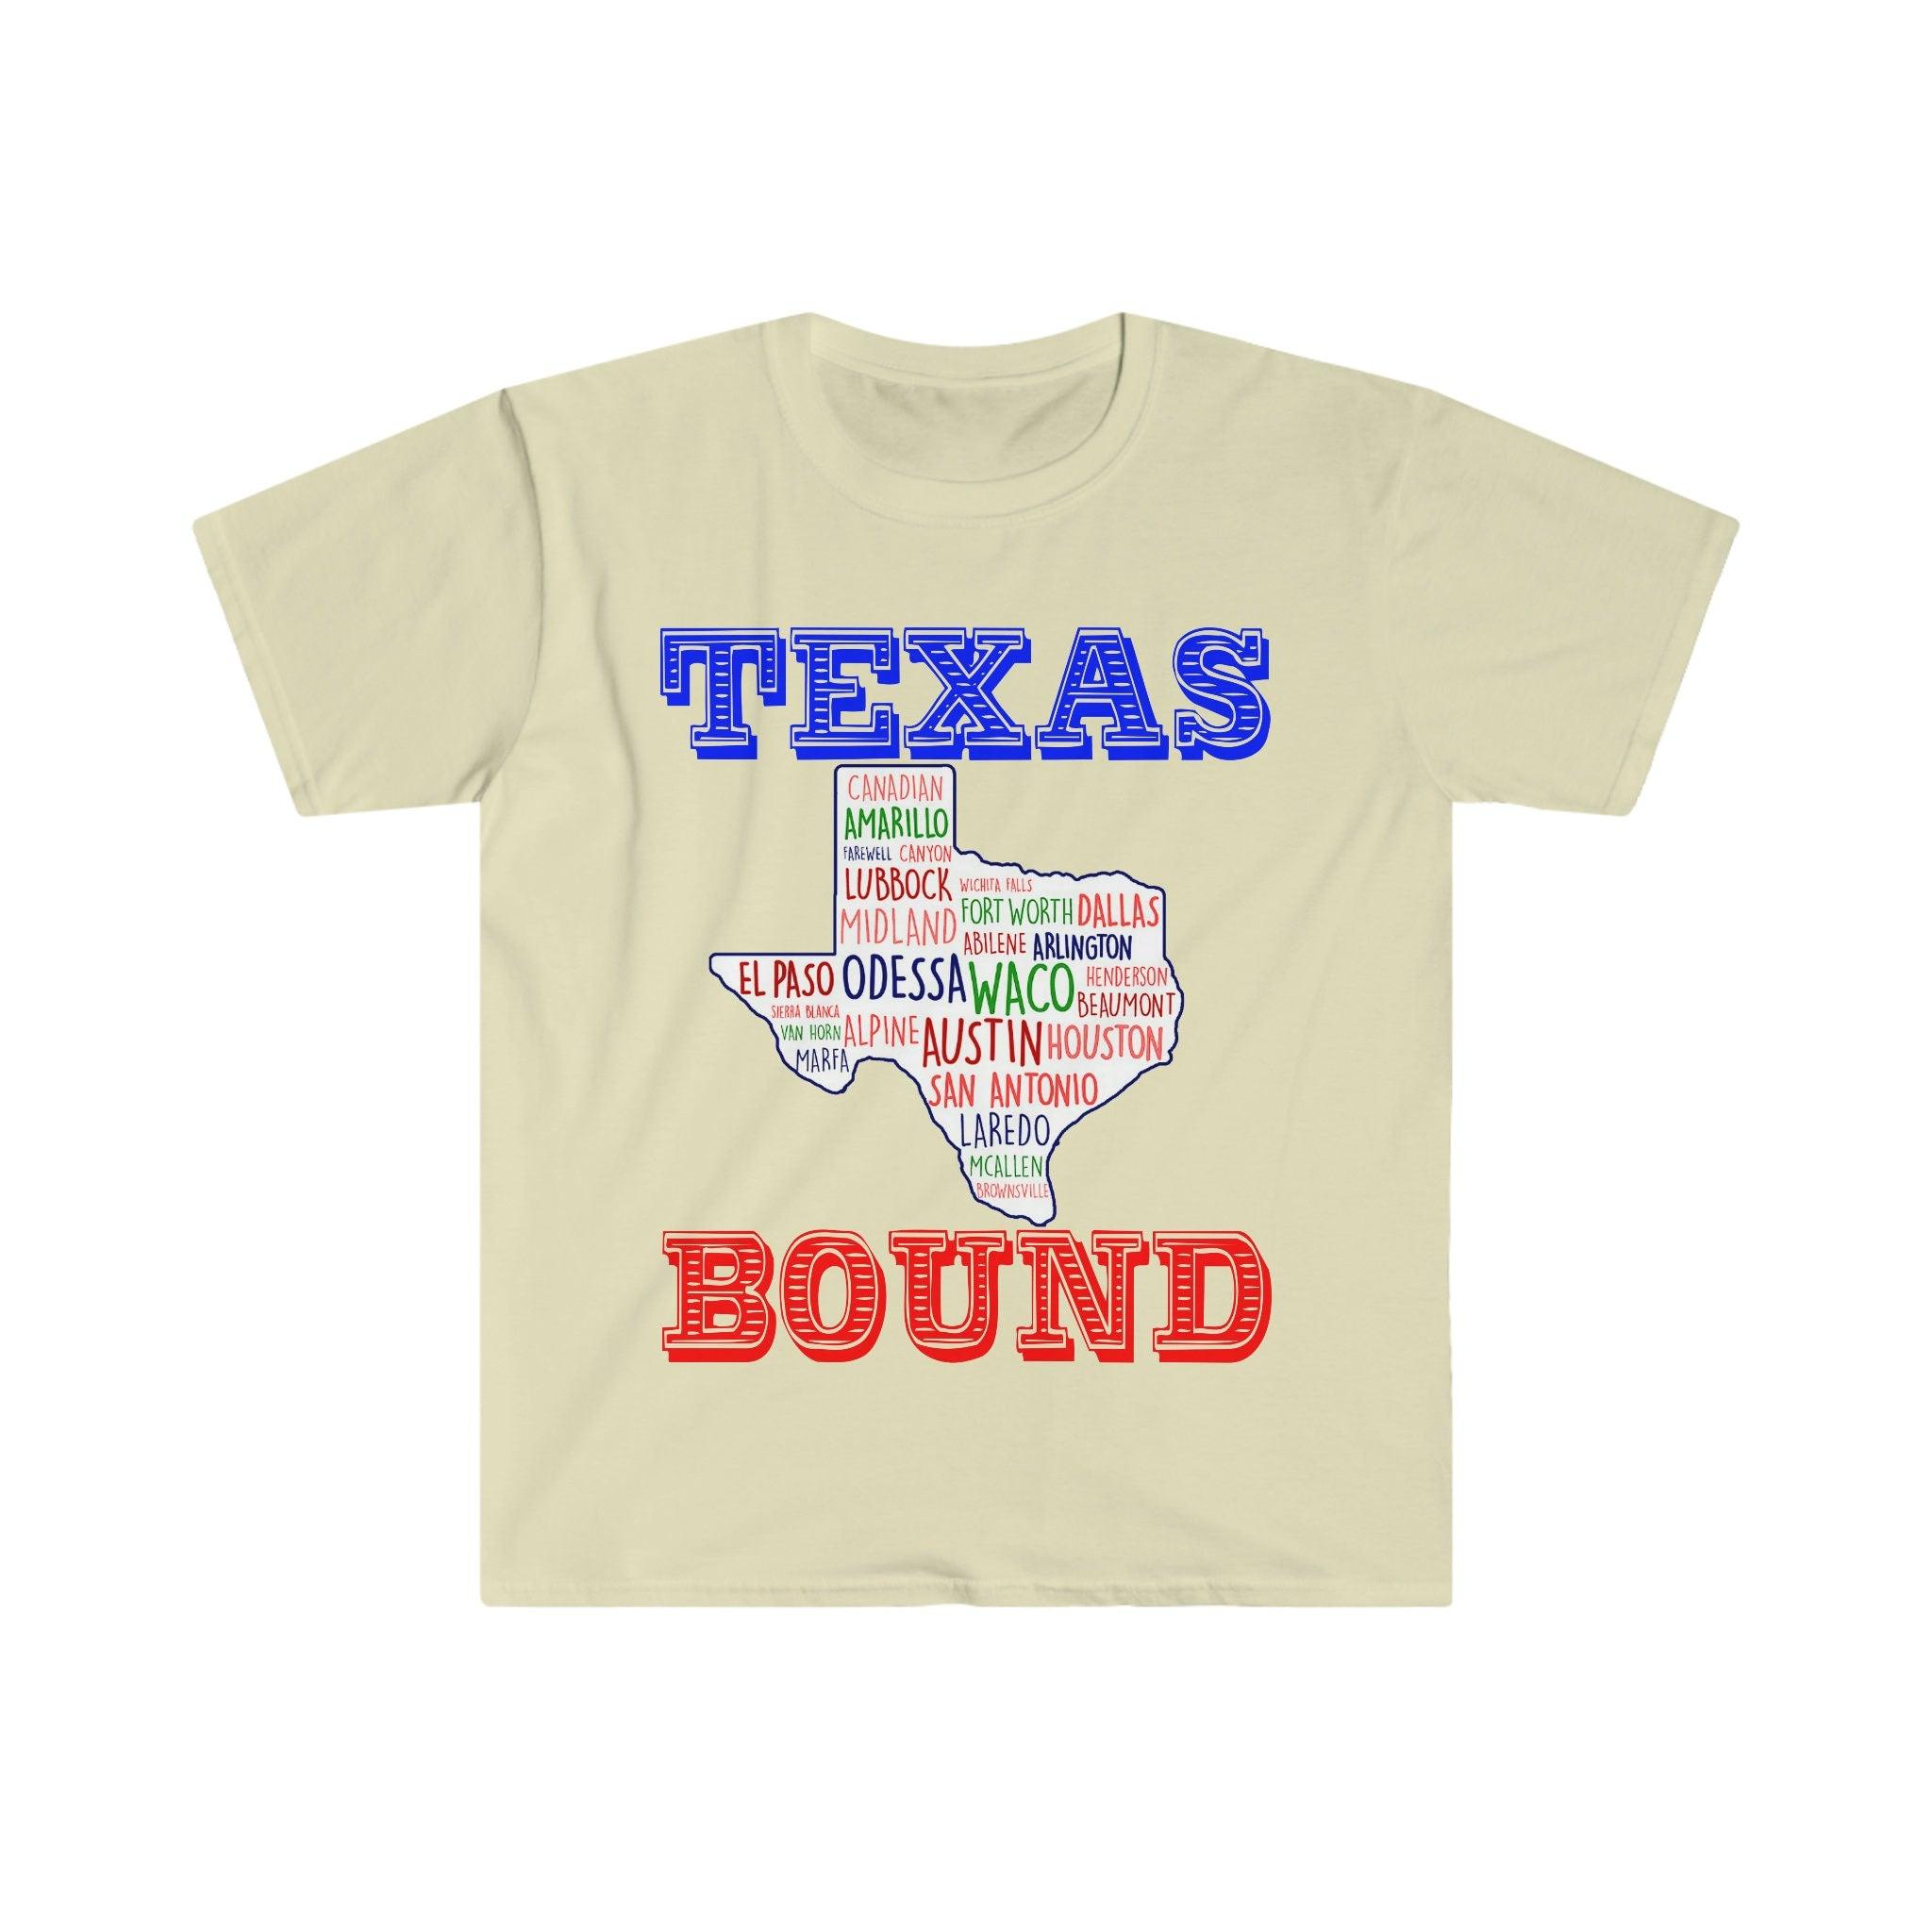 Veza za Teksas | Texas Places T-shirts | Texas Map T-shirts, Moving to Austin , Welcome to Texas Gift, Texas Bound, New in Texas, Moving to DFW Beat biden dictionary tax, Biden tax plan, liberal liberal, Houston, selidba u Austin, selidba u DFW, Preseljenje u Teksas, Preseljenje u Teksas Šalica, Novo u Teksasu, Republikanac, Majica, majice, vezana za Teksas, teksaška djevojka, teksaška republikanka u - plusminusco.com